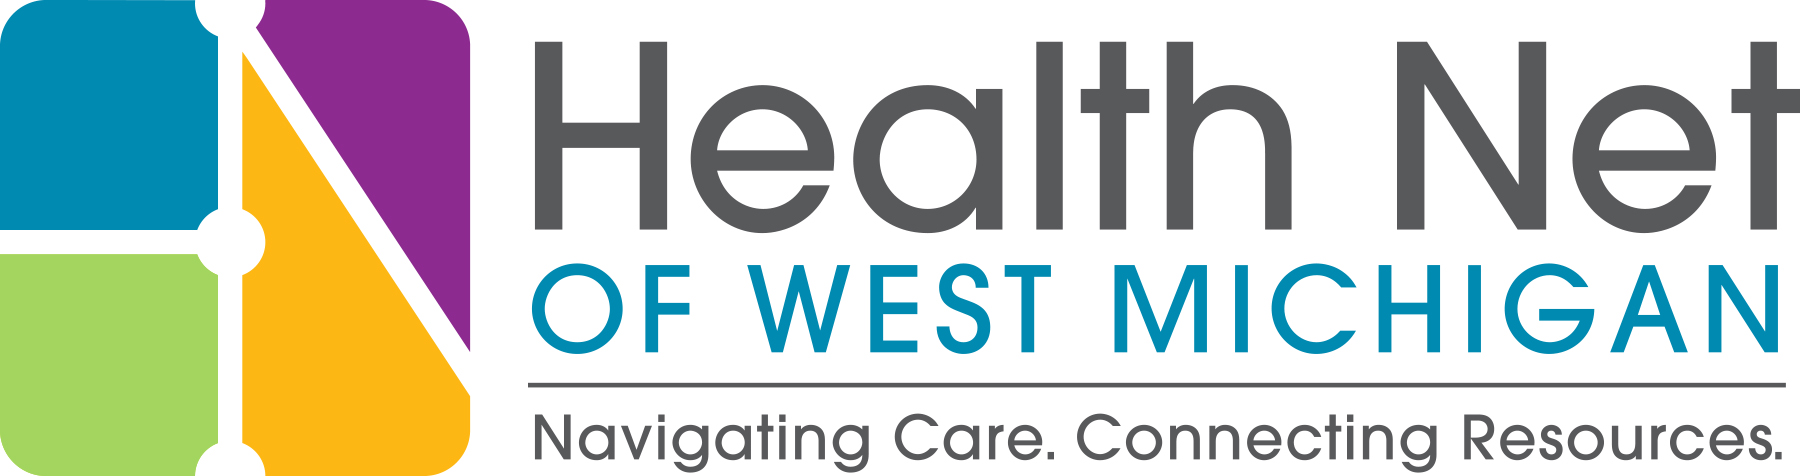 Health Net of West Michigan